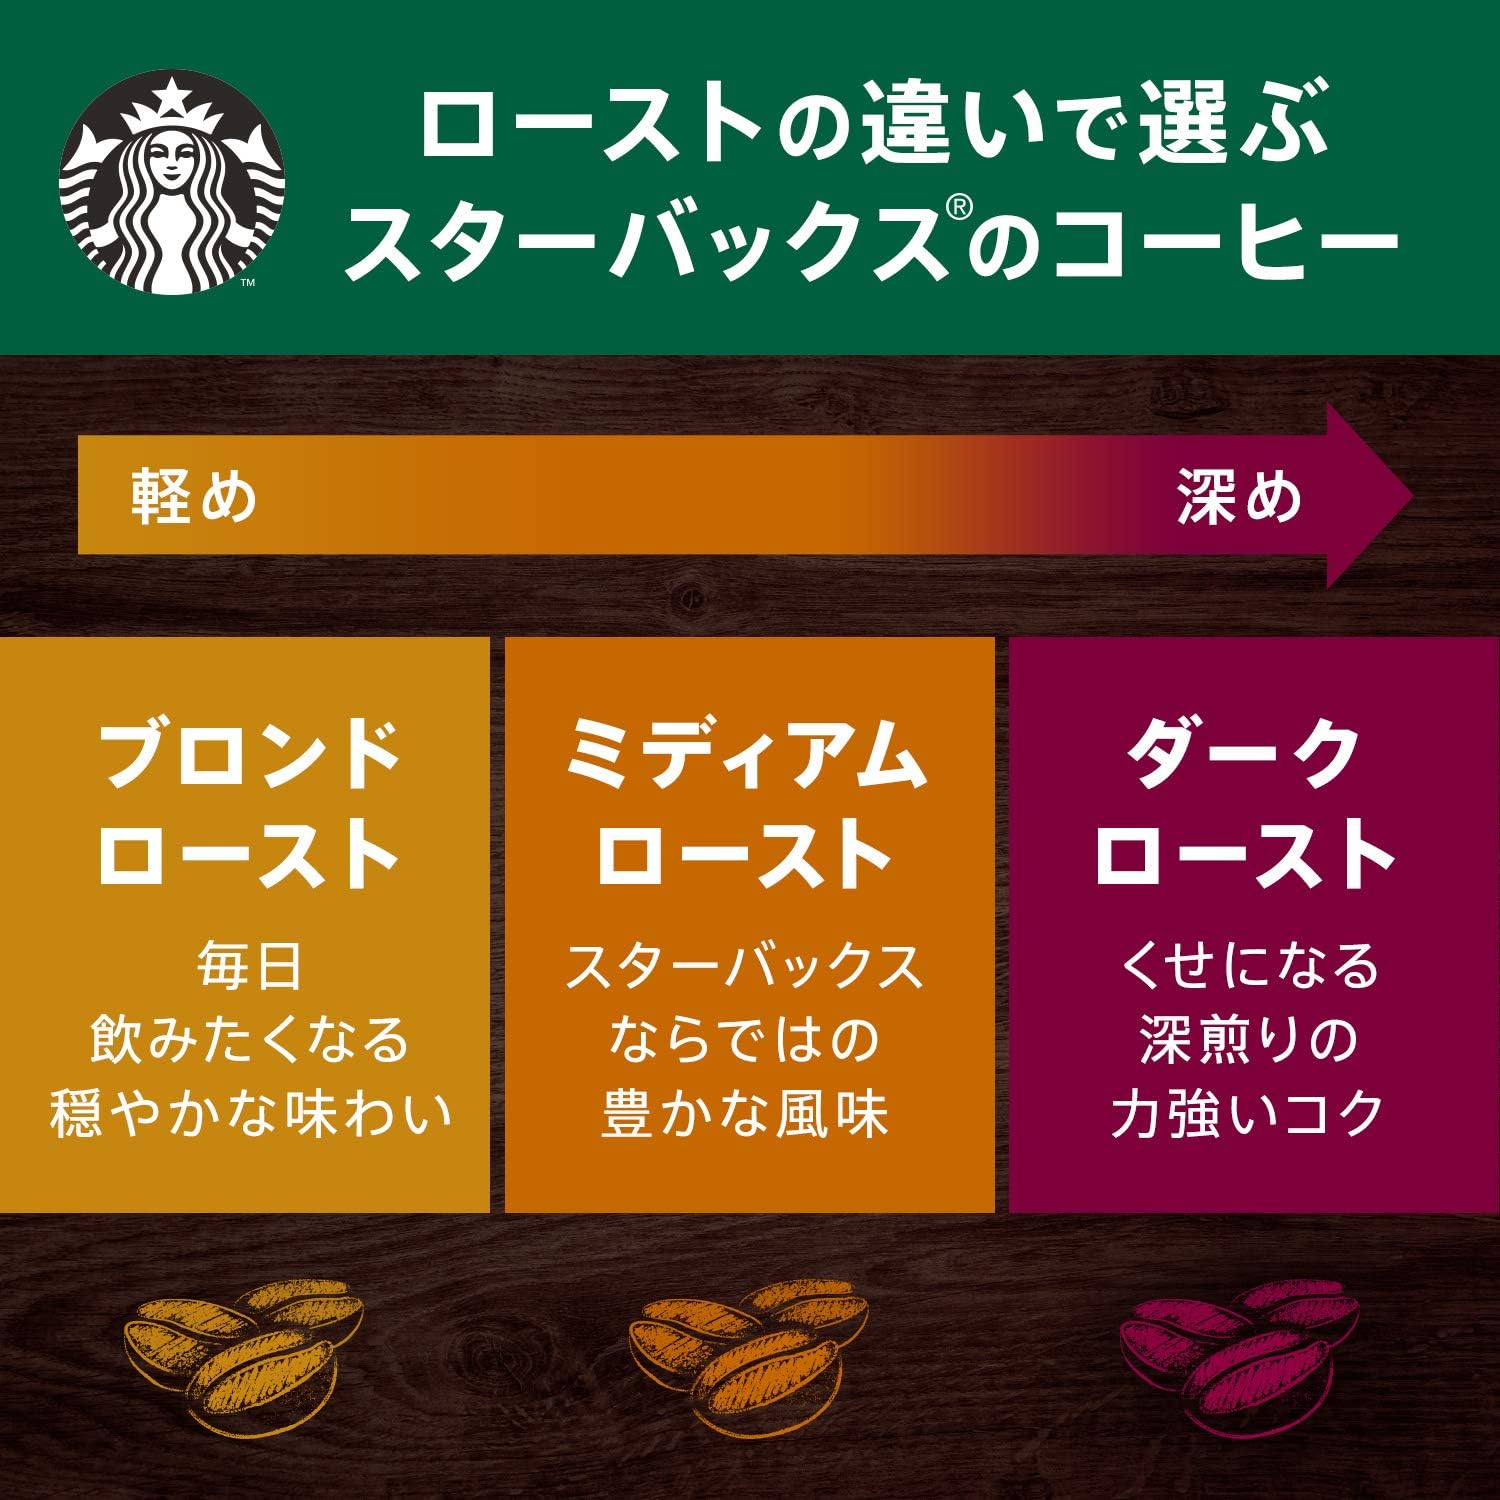  Nestle Starbucks coffee ice coffee Blend 140g ×2 sack regular ( flour ) 140g×2 sack flour 